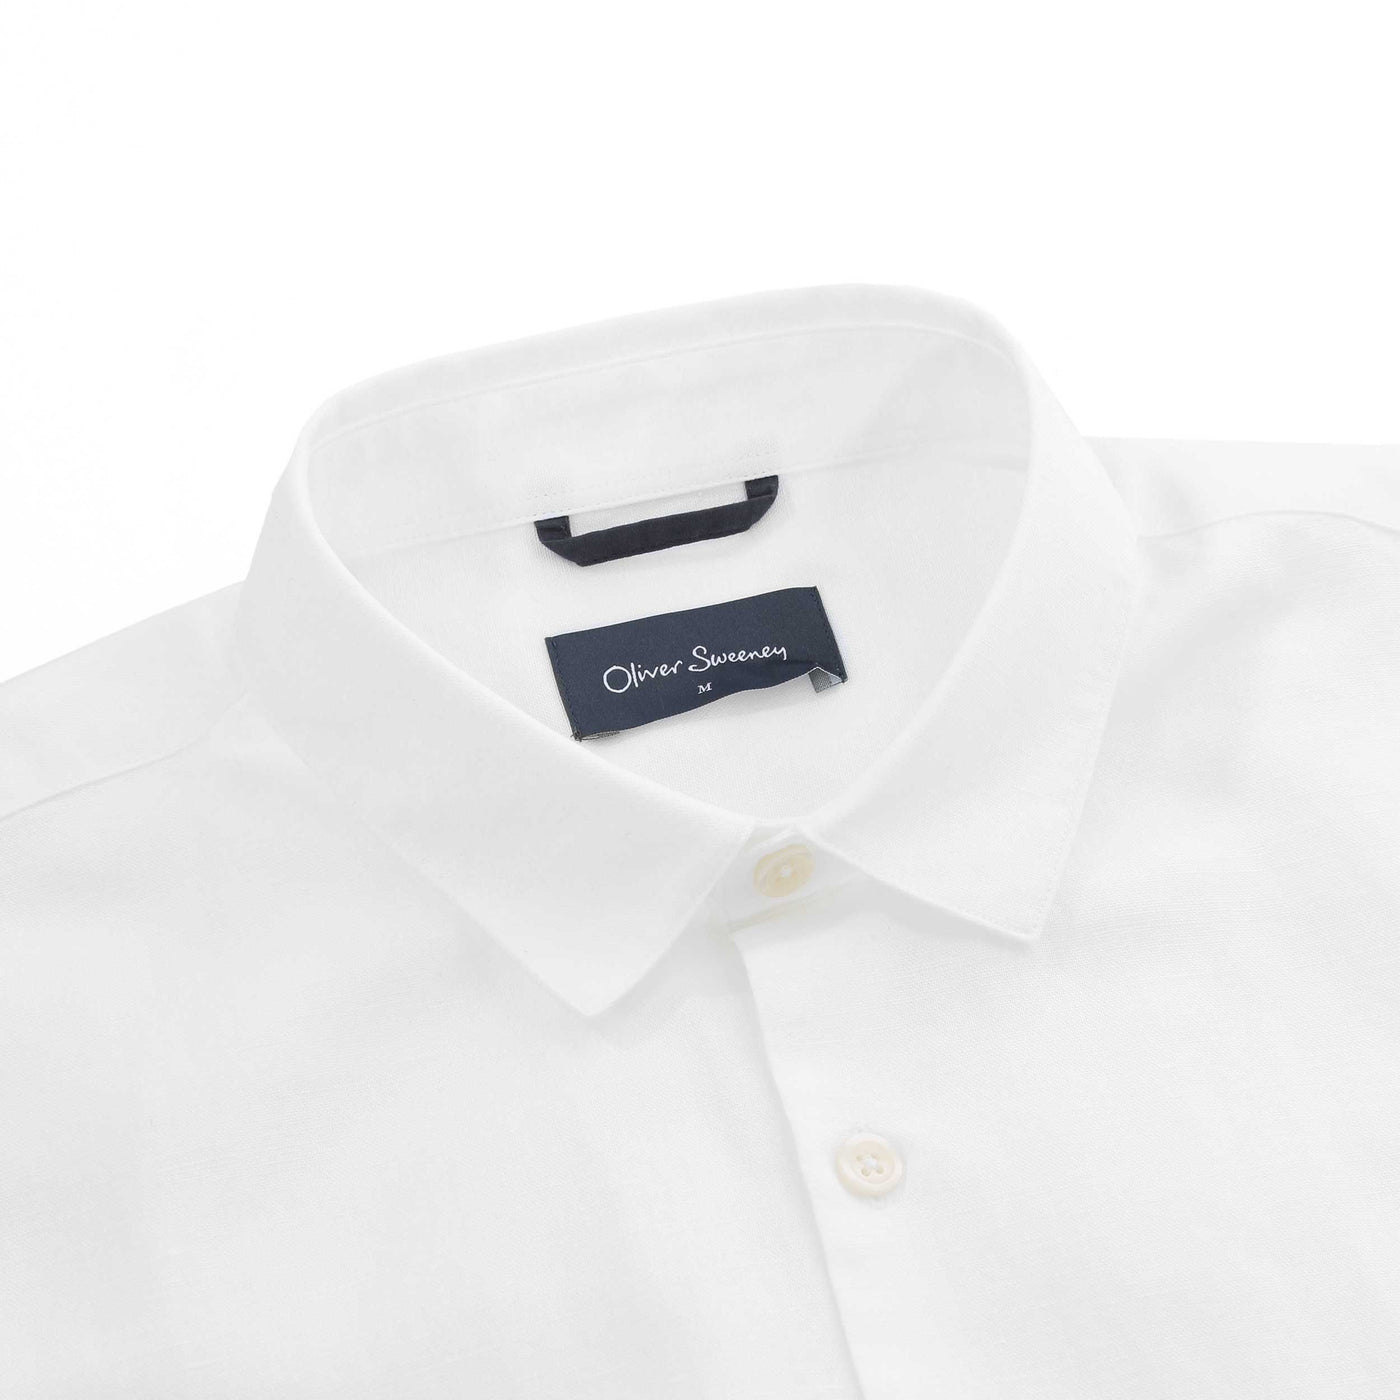 Oliver Sweeney Eakring SS Shirt in White Collar